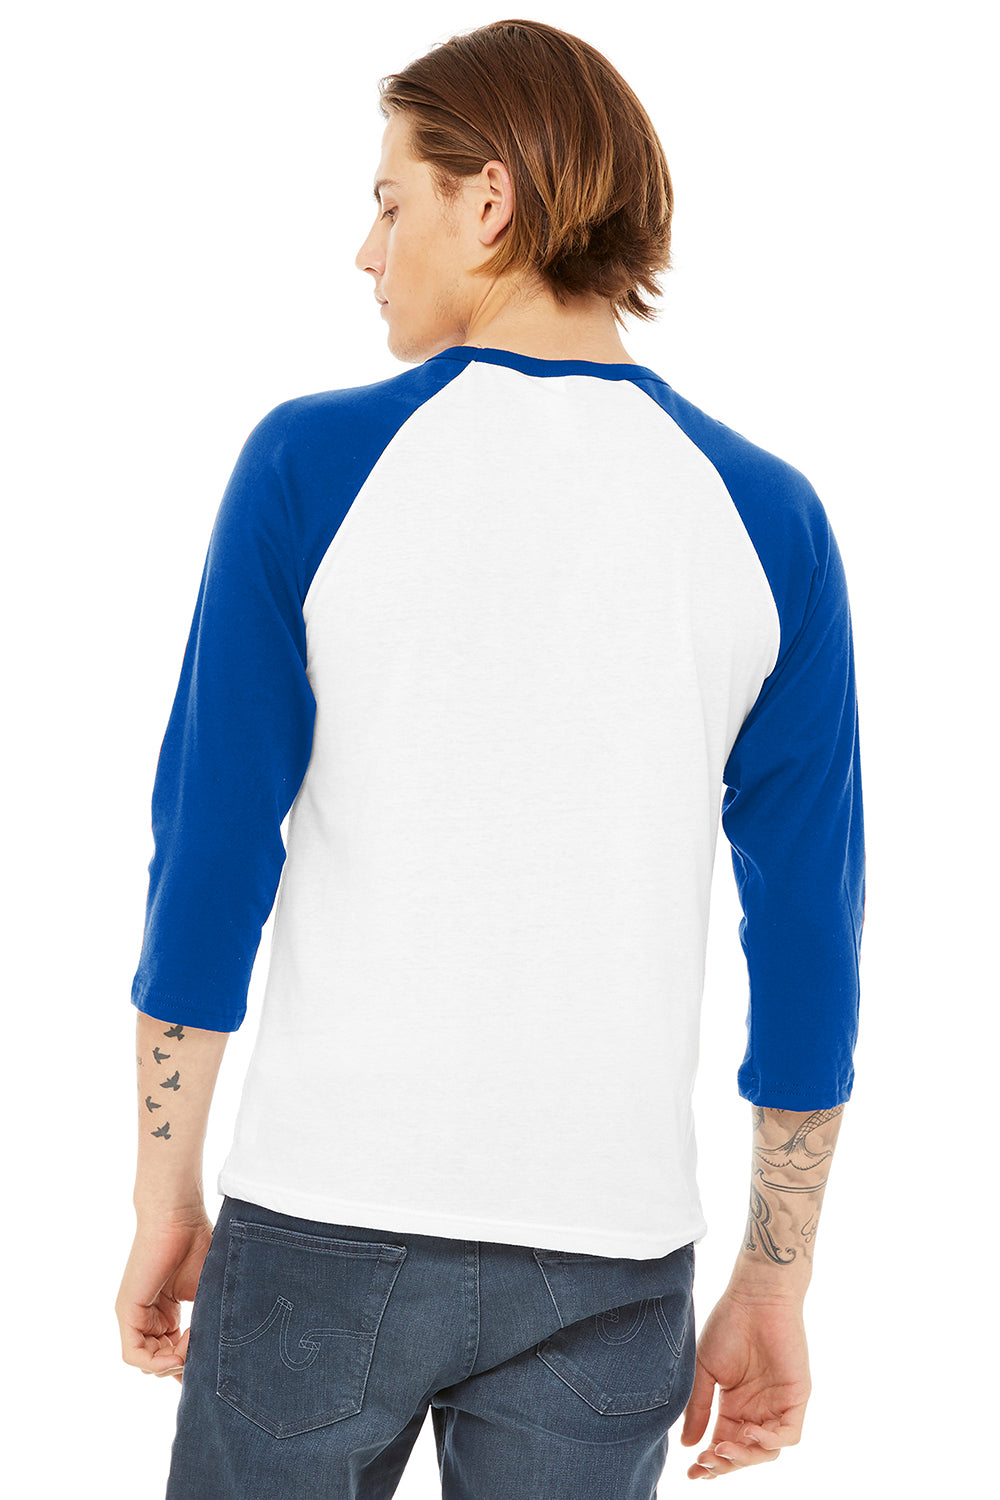 Bella + Canvas BC3200/3200 Mens 3/4 Sleeve Crewneck T-Shirt White/Royal Blue Model Back